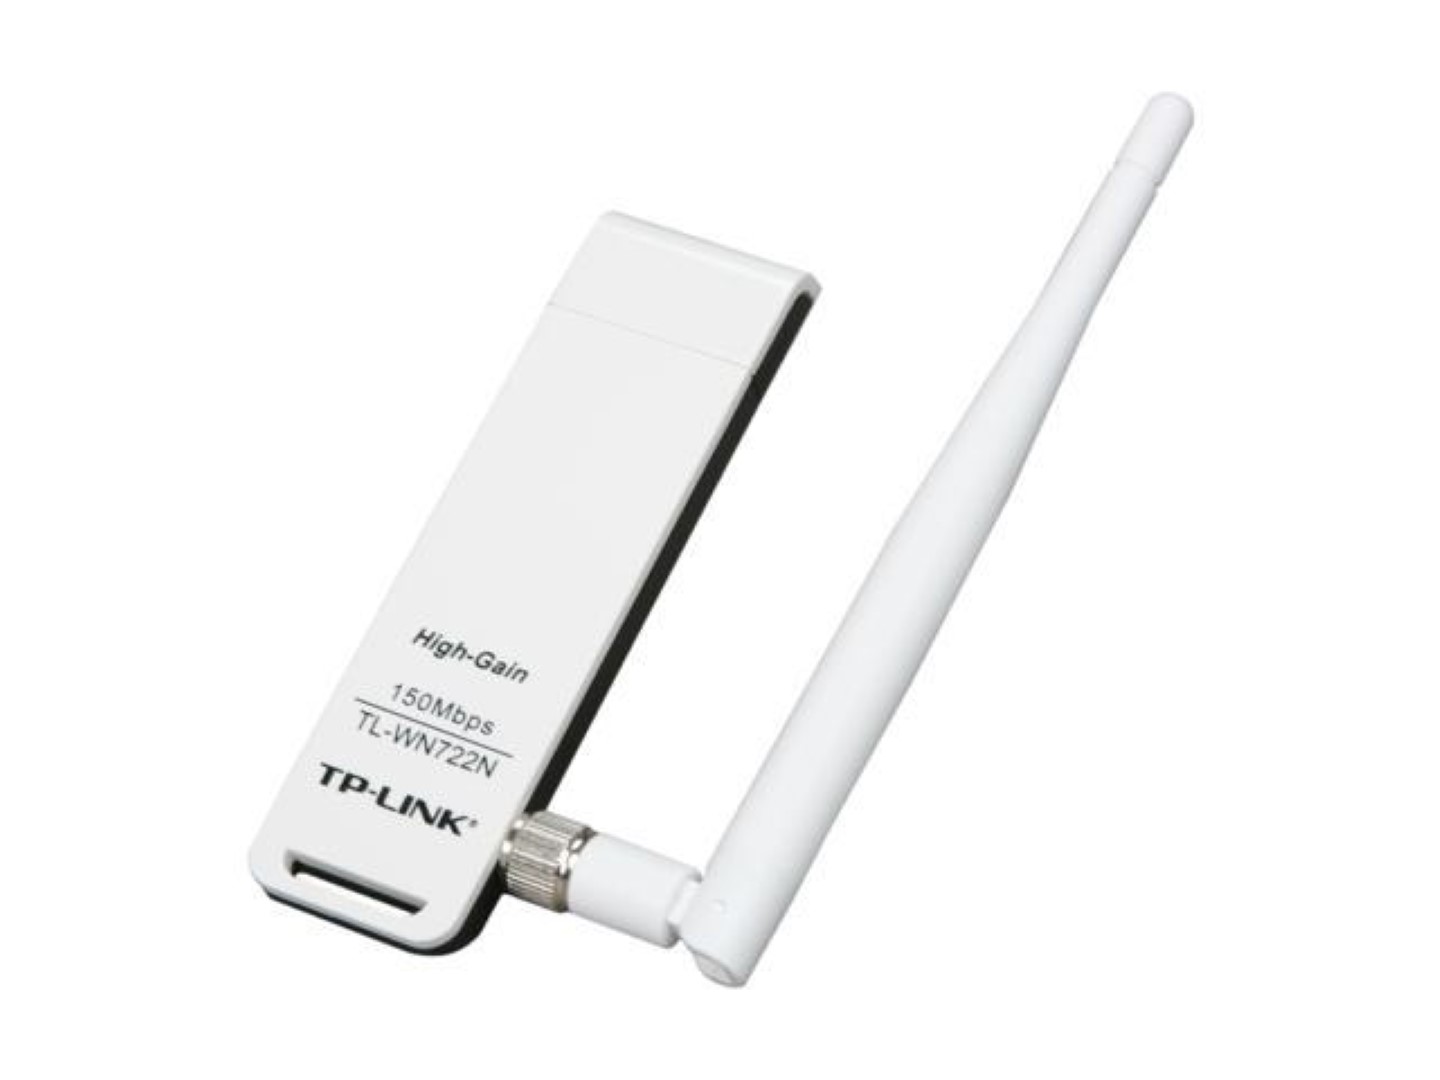 Tp link high. Wi-Fi USB-адаптер TP-link TL-wn722n. TP-link TL-wn722n 150mbps. TP-link TL-wn722n. Wi-Fi адаптер TP-link TL-wn722n, белый.